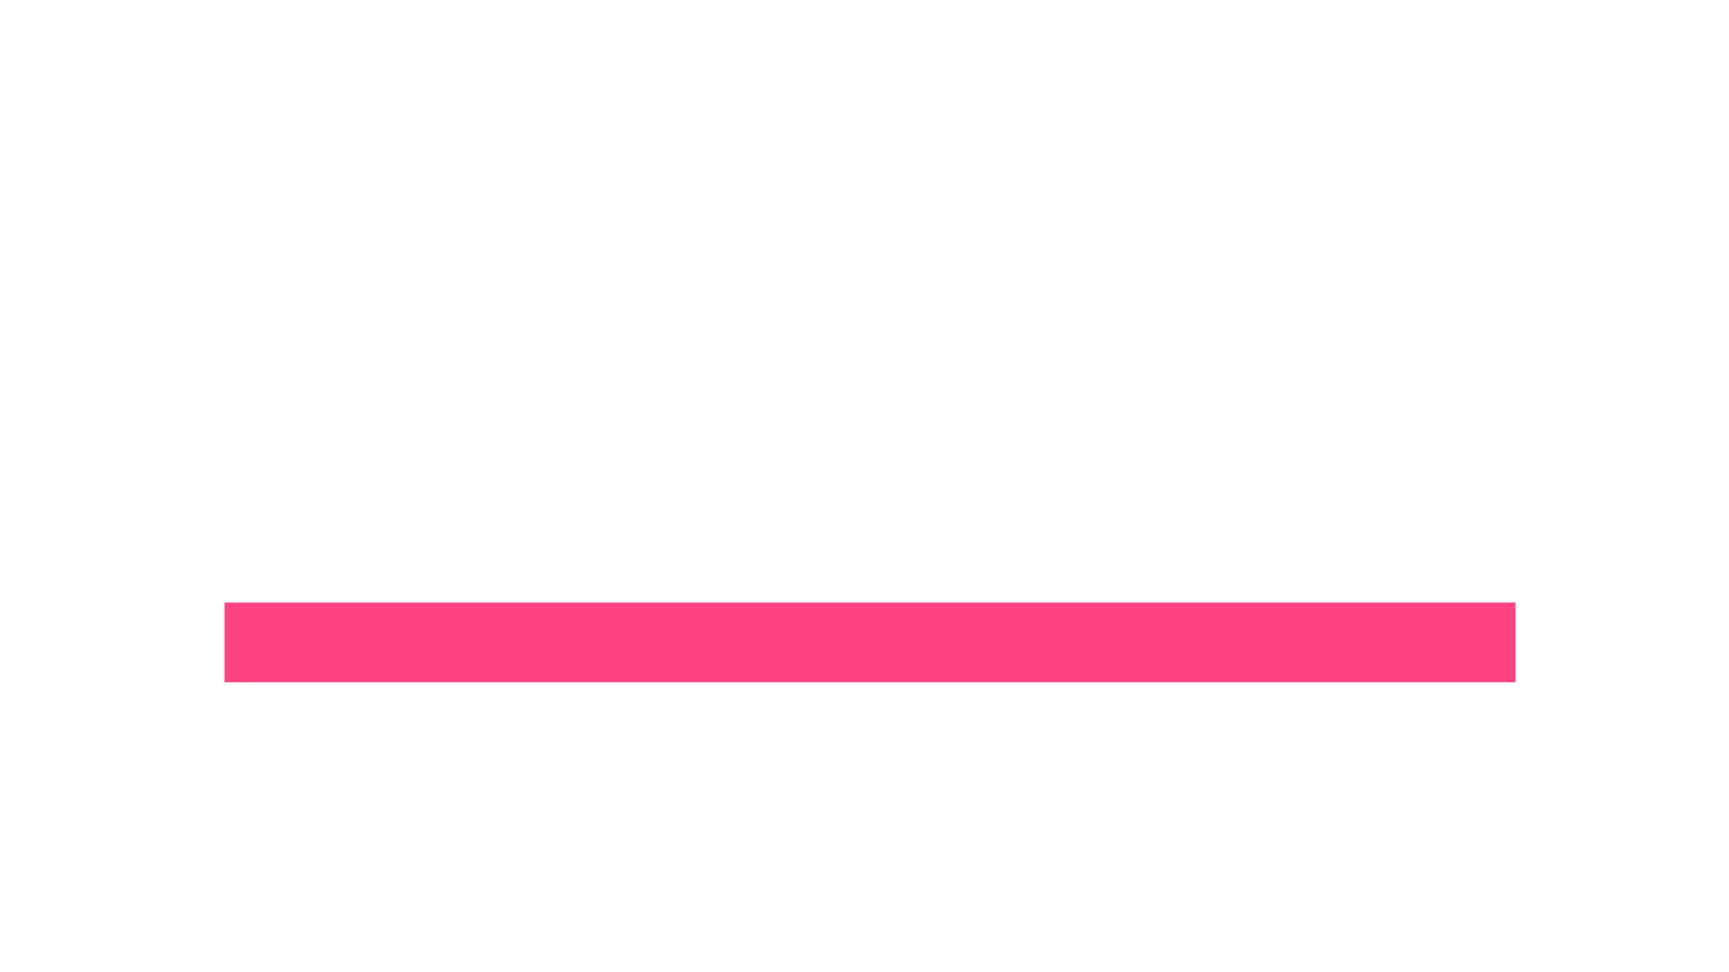 Logos purpose day 28 uai